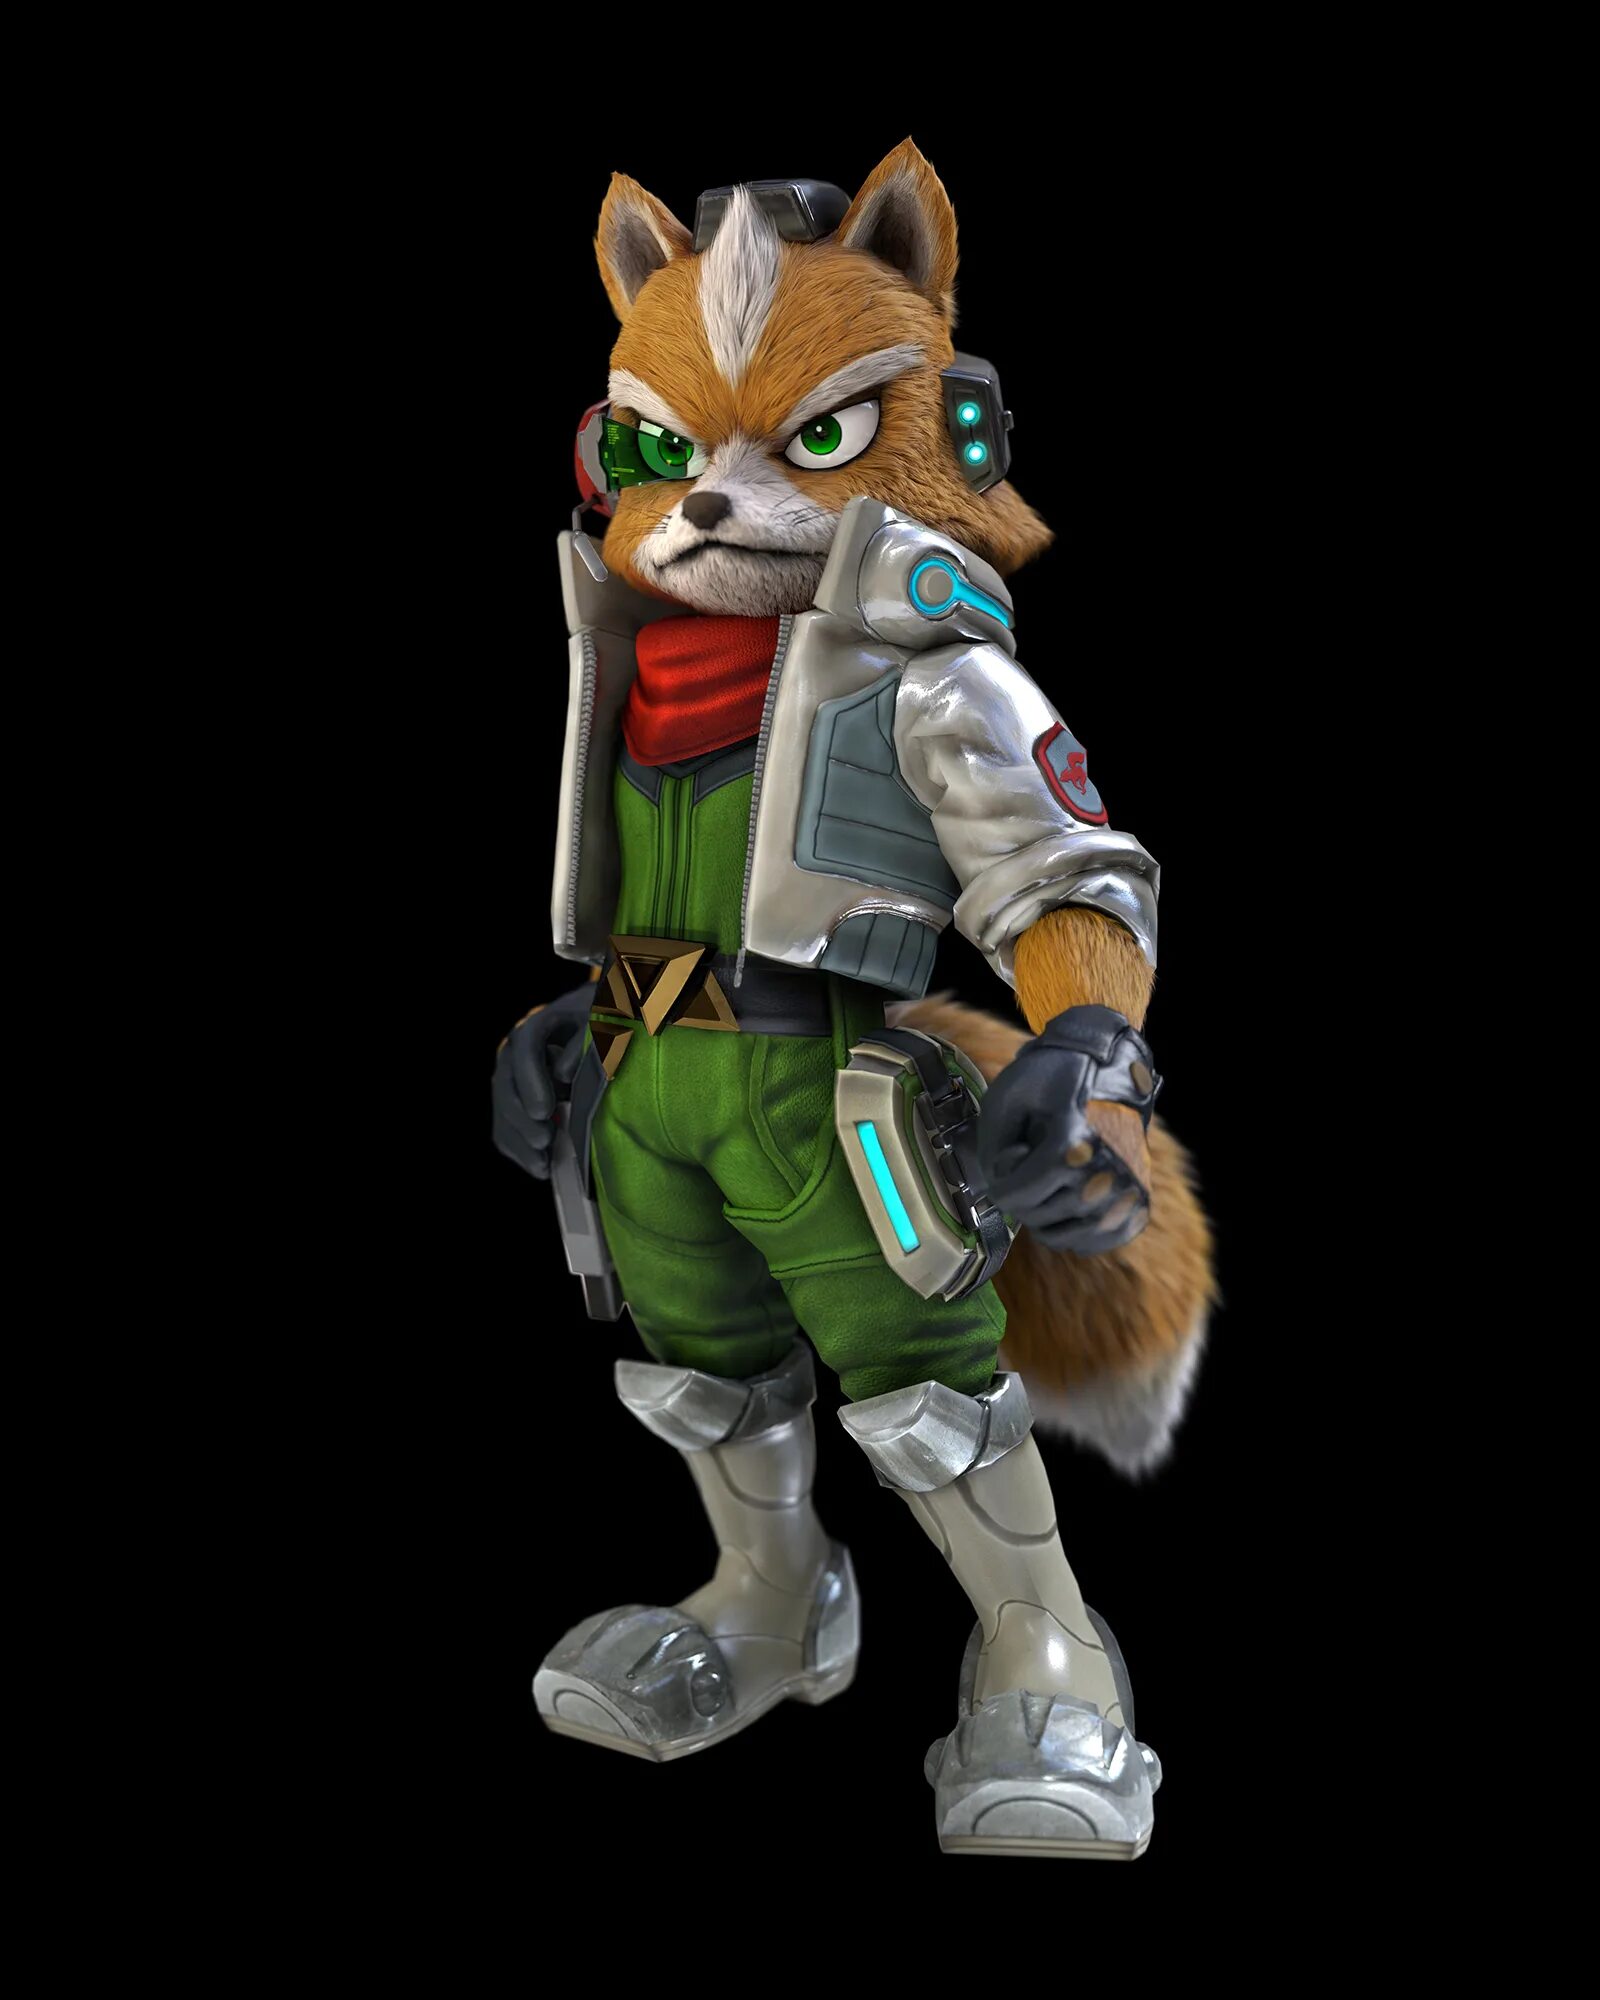 Zero fox. The Fox and the Star. Фокс Макклауд. Star Fox Fox MCCLOUD. Star Fox Zero.